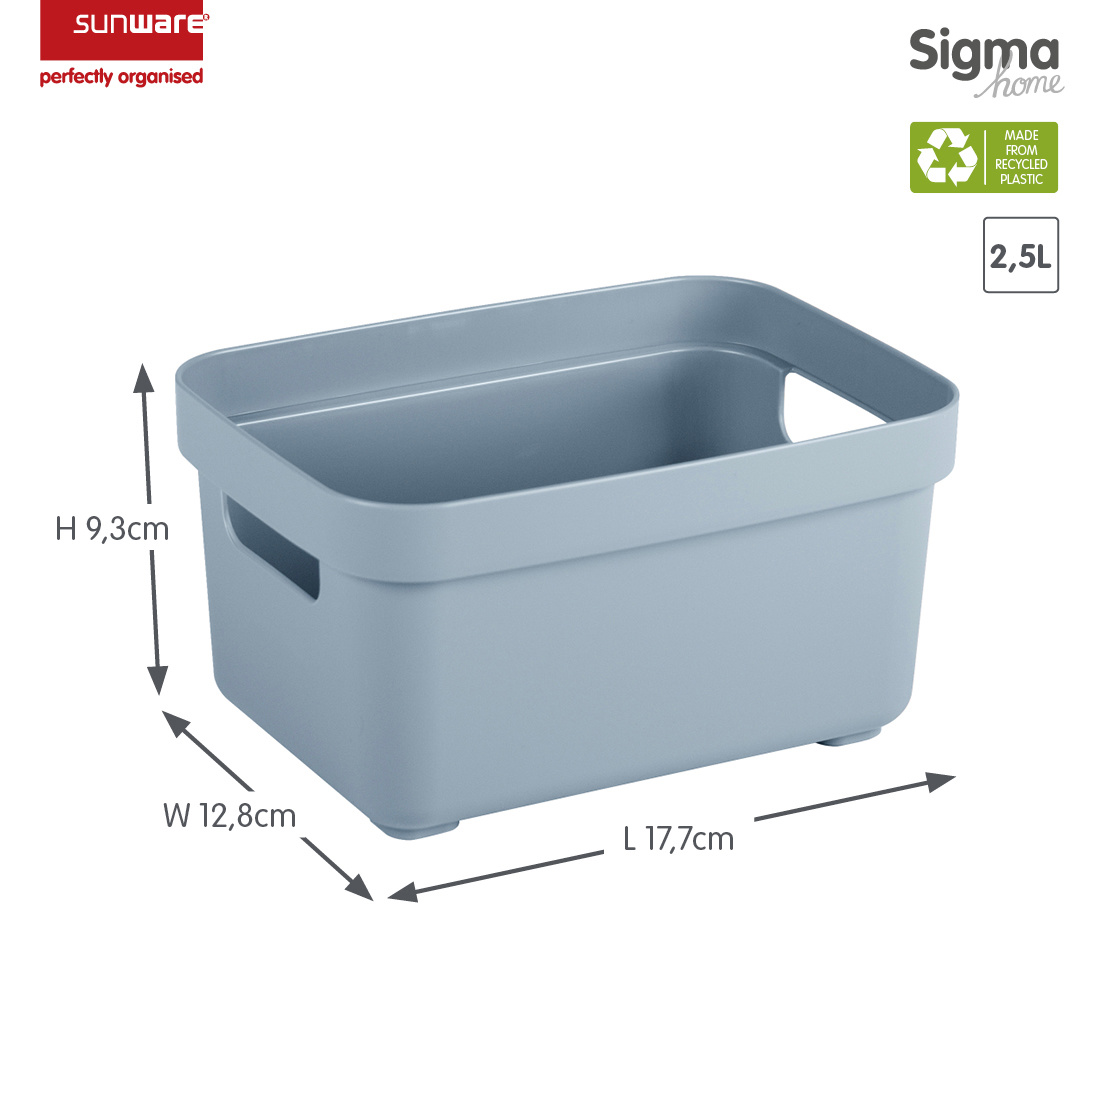 Sigma home storage box 2.5L blue